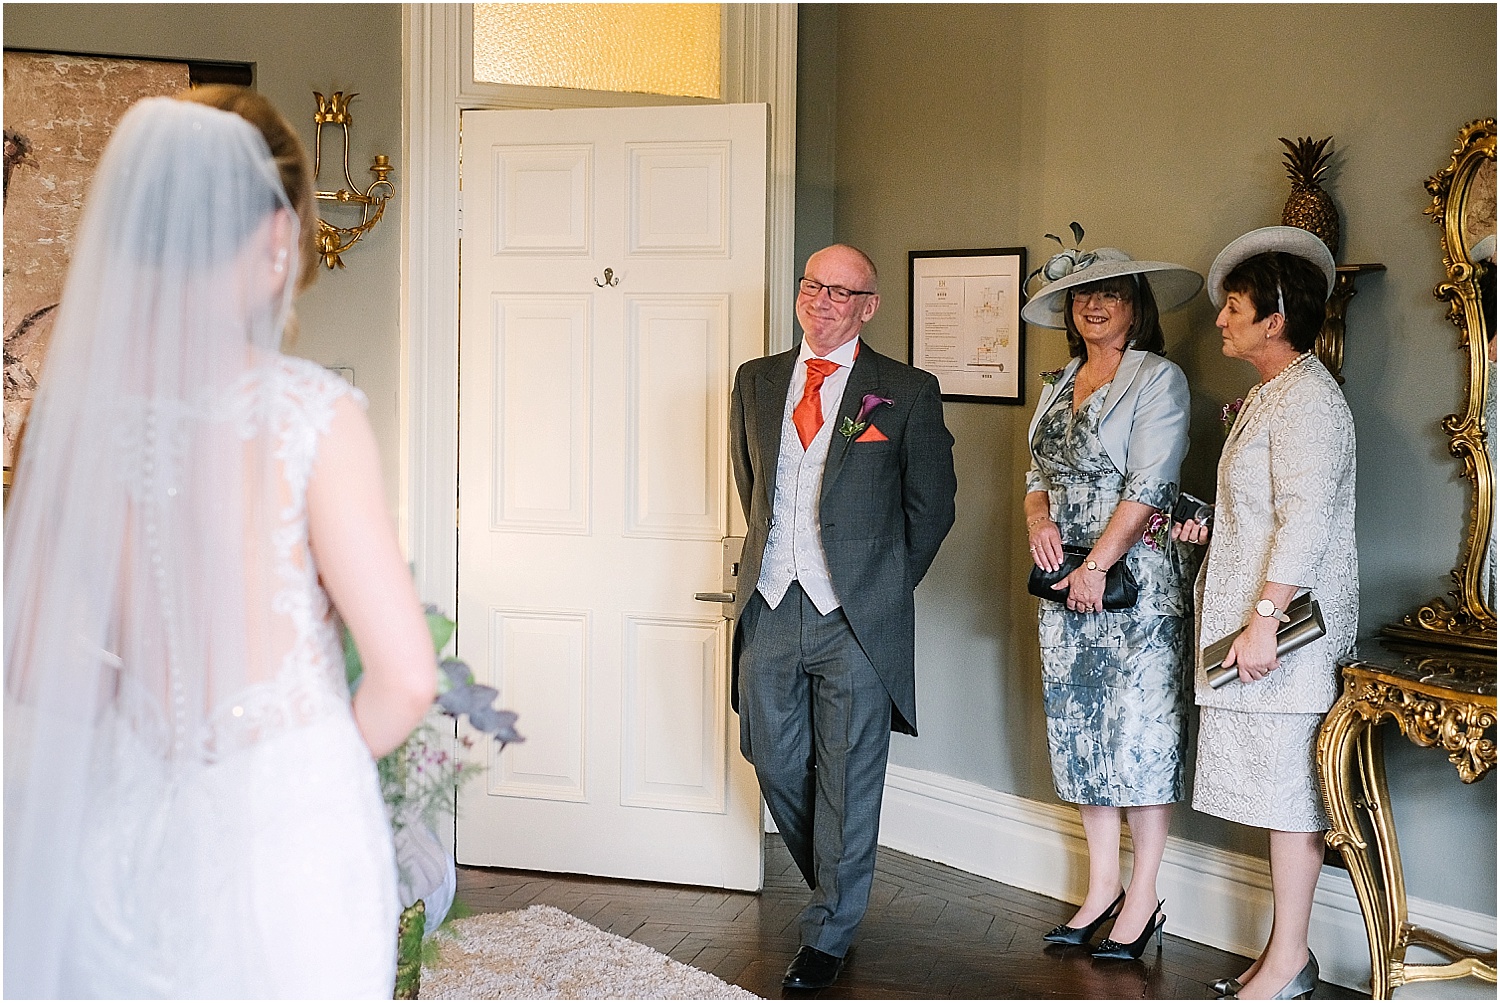 Ellingham Hall wedding photography by 2tone Photography 015.jpg